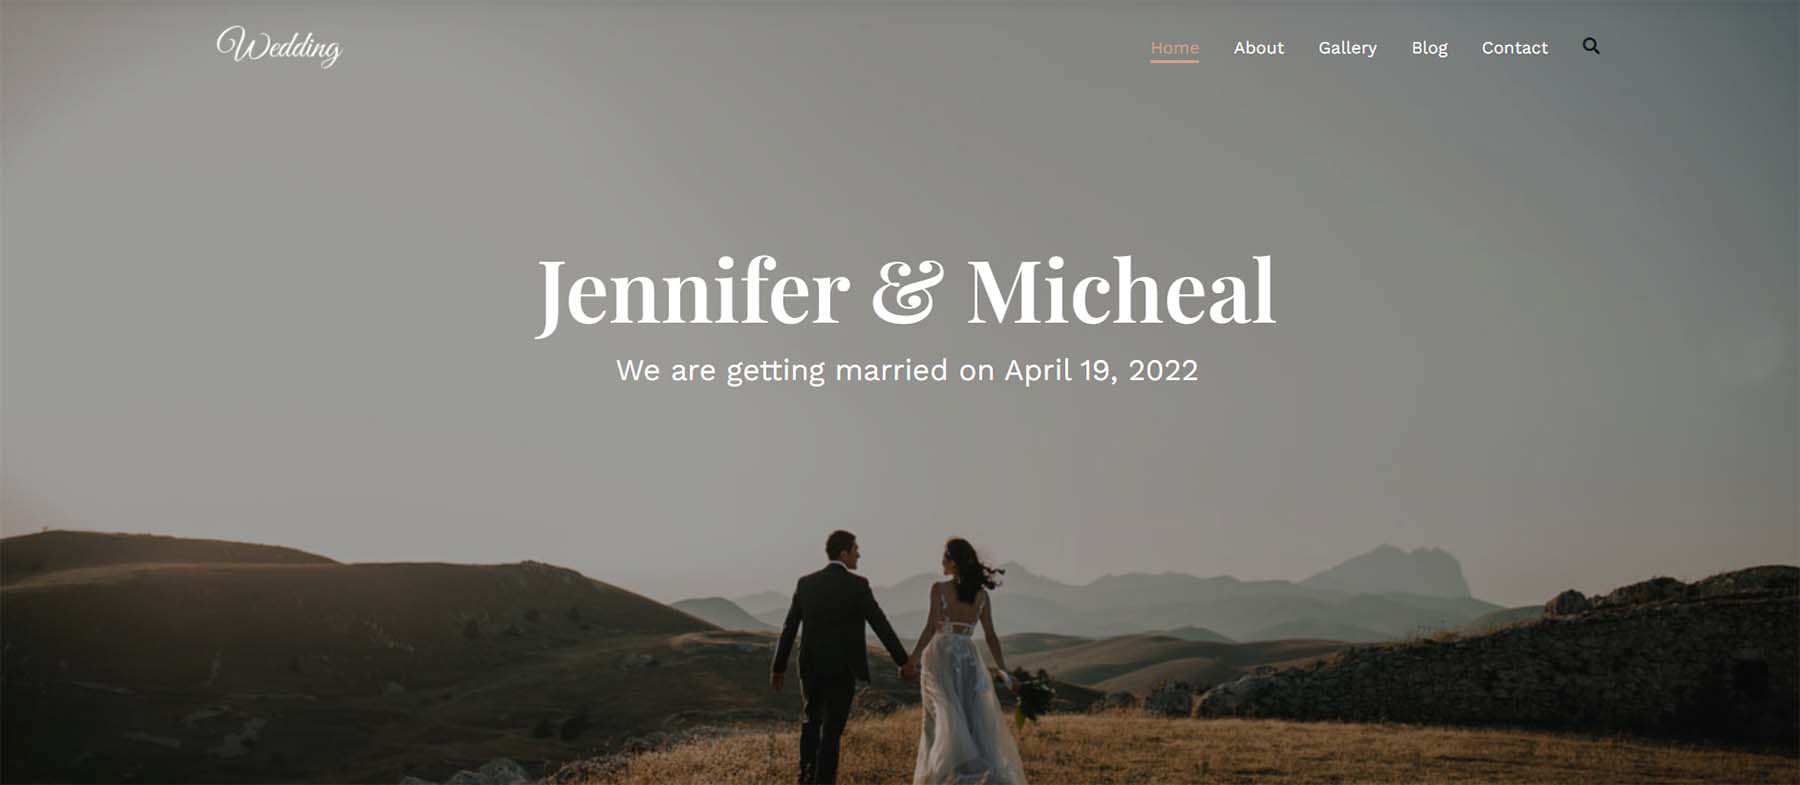 Zakra, one of the best WordPress Wedding Themes for Wedding Websites